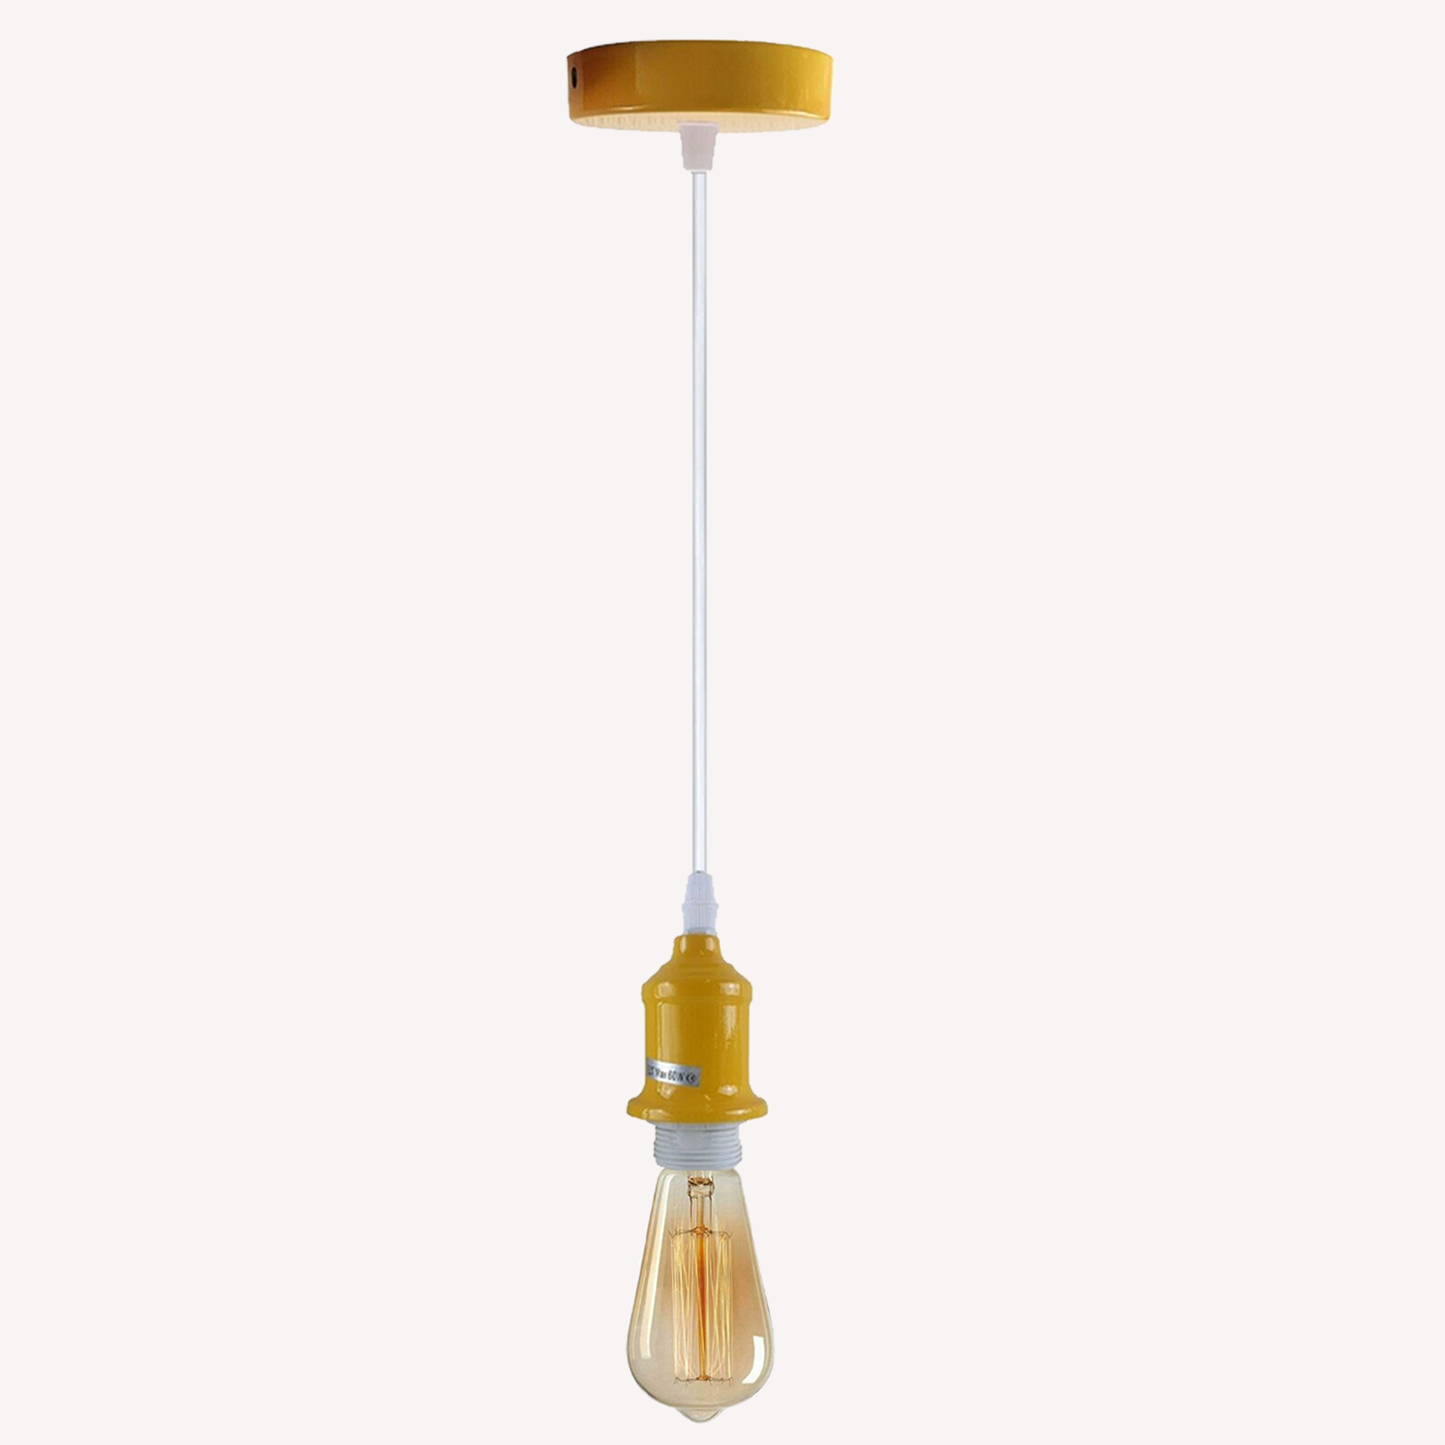 E27 Pendant Holder Ceiling Light Fitting Vintage Industrial Yellow